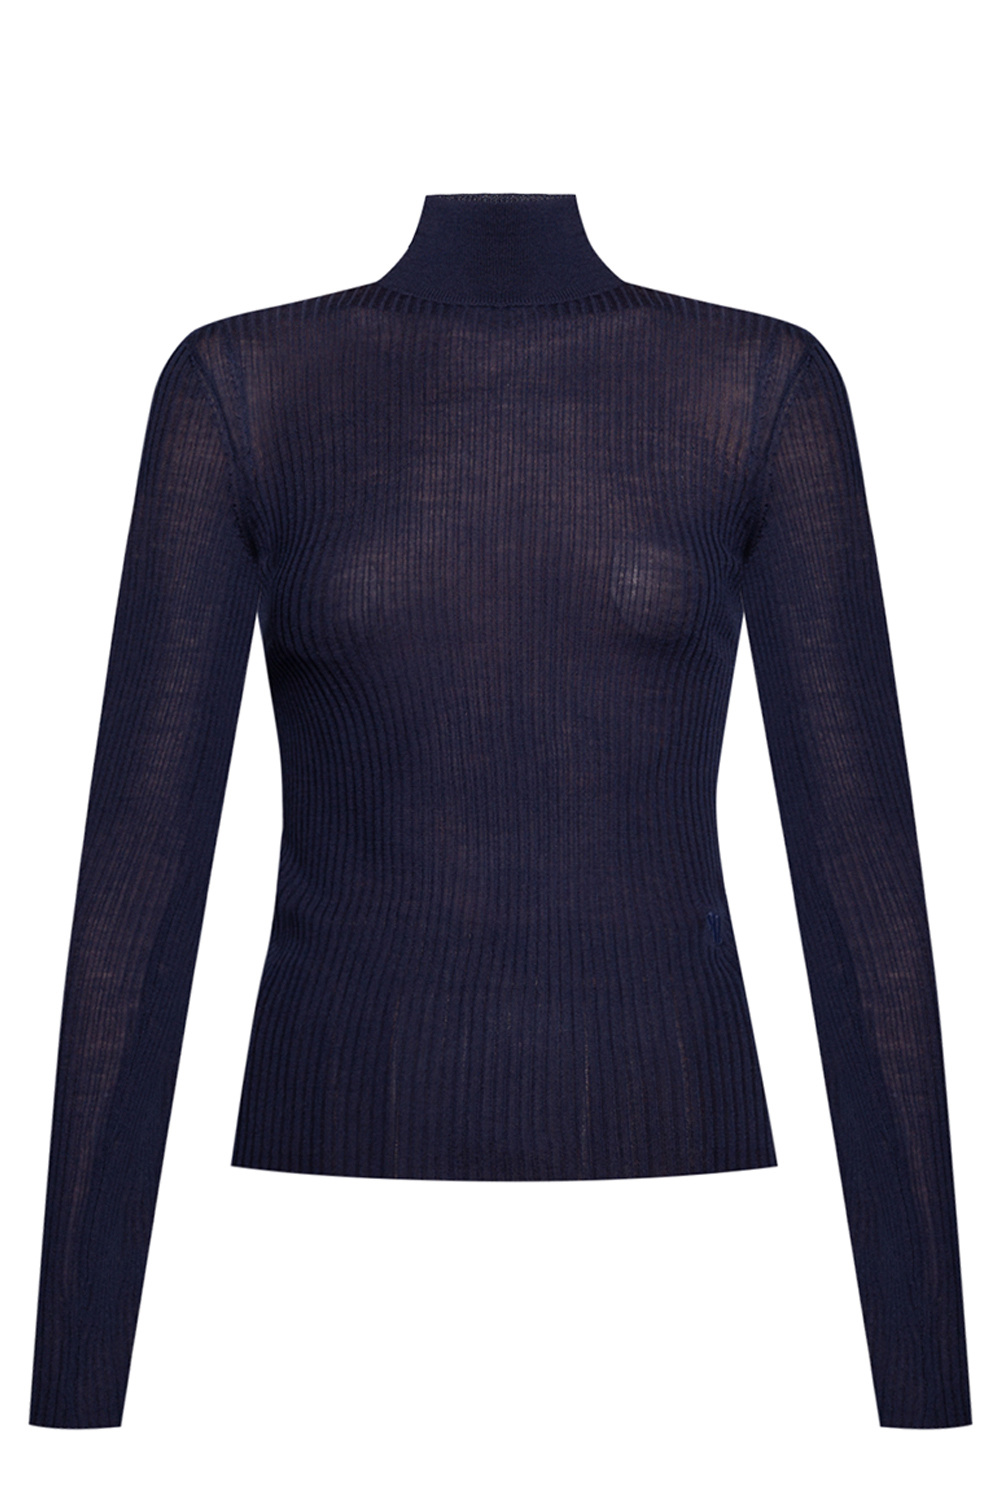 JAC' sweatshirt Diesel - Nanushka WOMEN ACTIVEWEAR tops & t-shirts